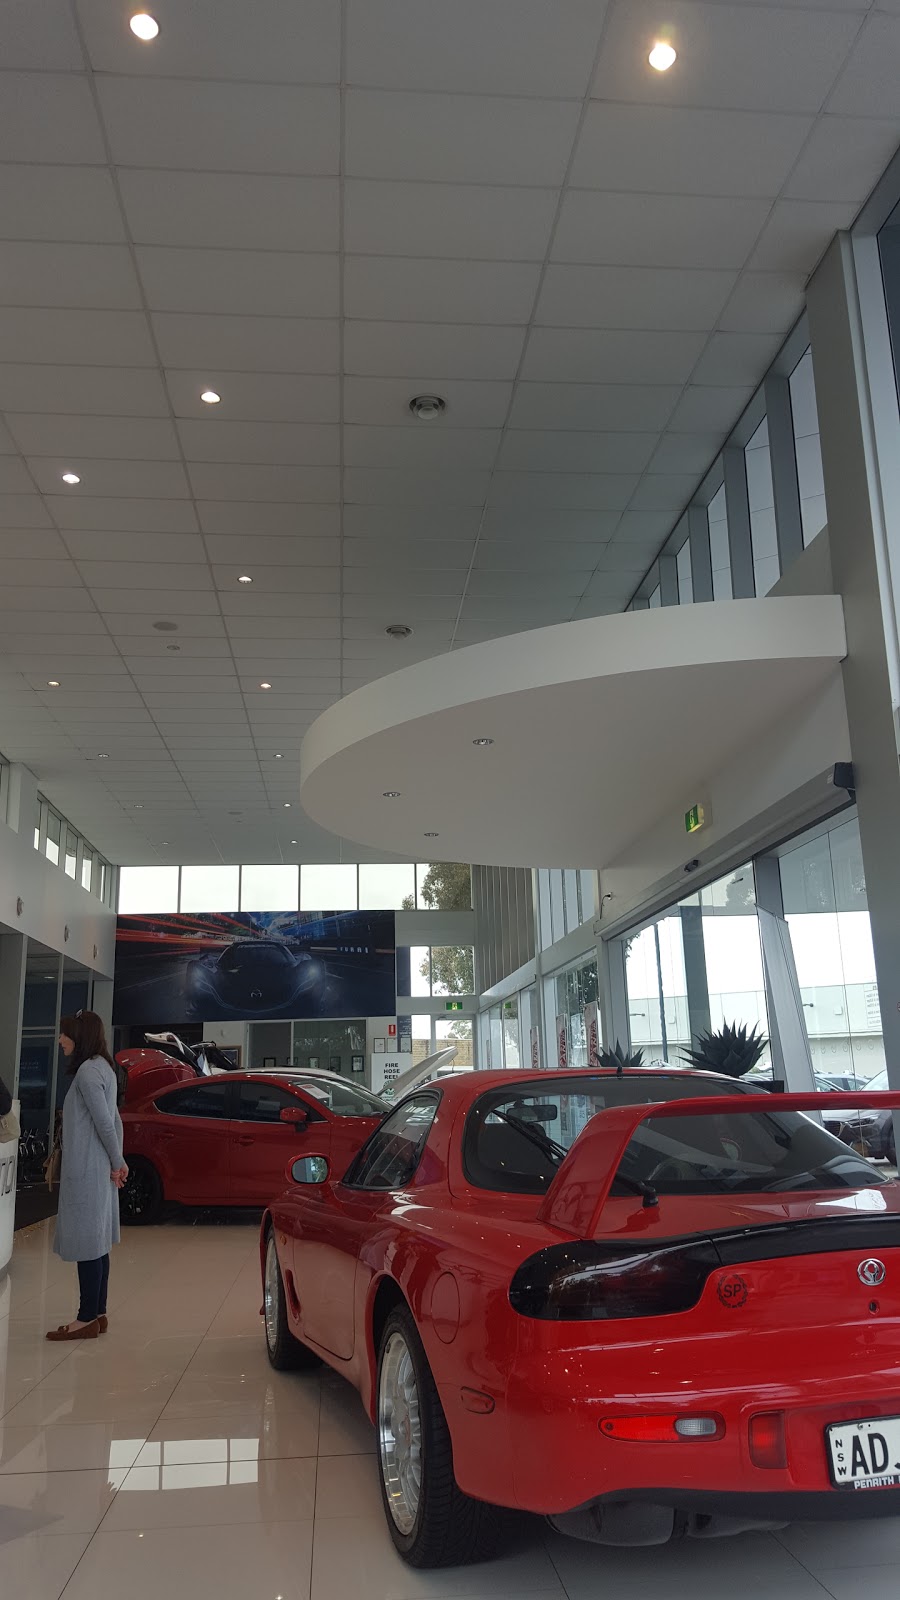 Penrith Mazda Centre | car dealer | 81-87 Regentville Rd, Jamisontown NSW 2750, Australia | 0247322777 OR +61 2 4732 2777